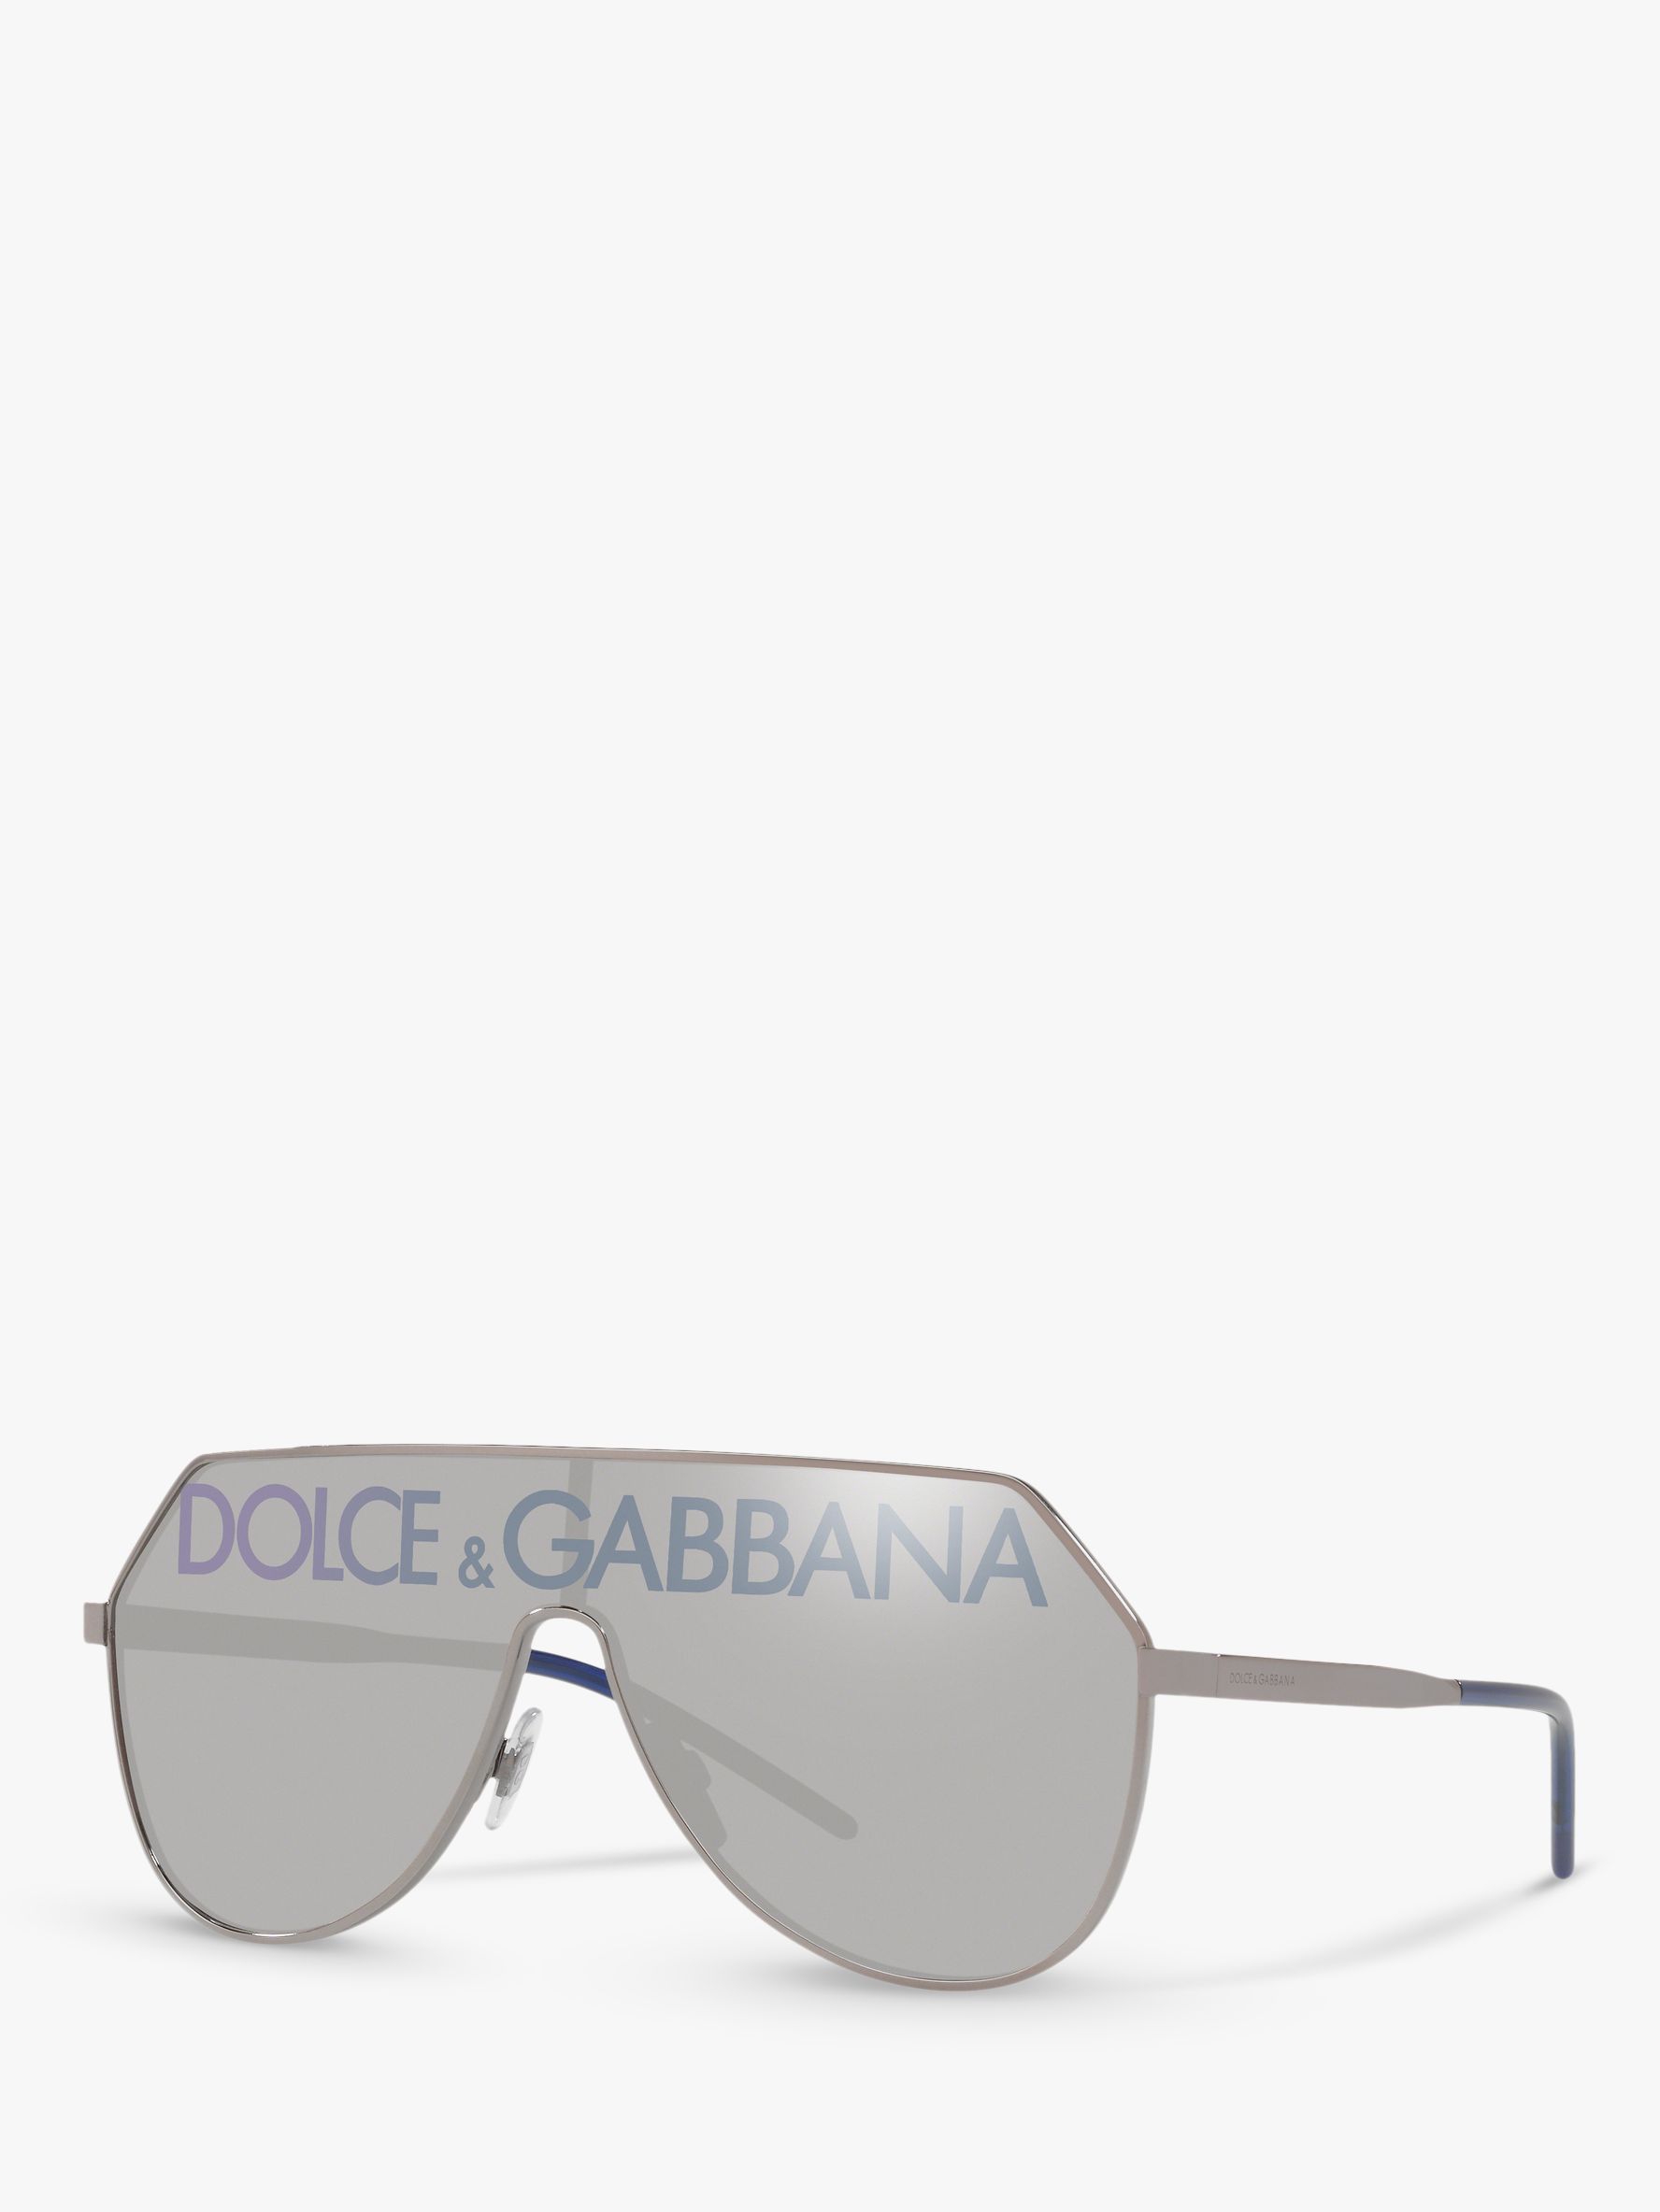 dolce gabbana sunglasses aviator